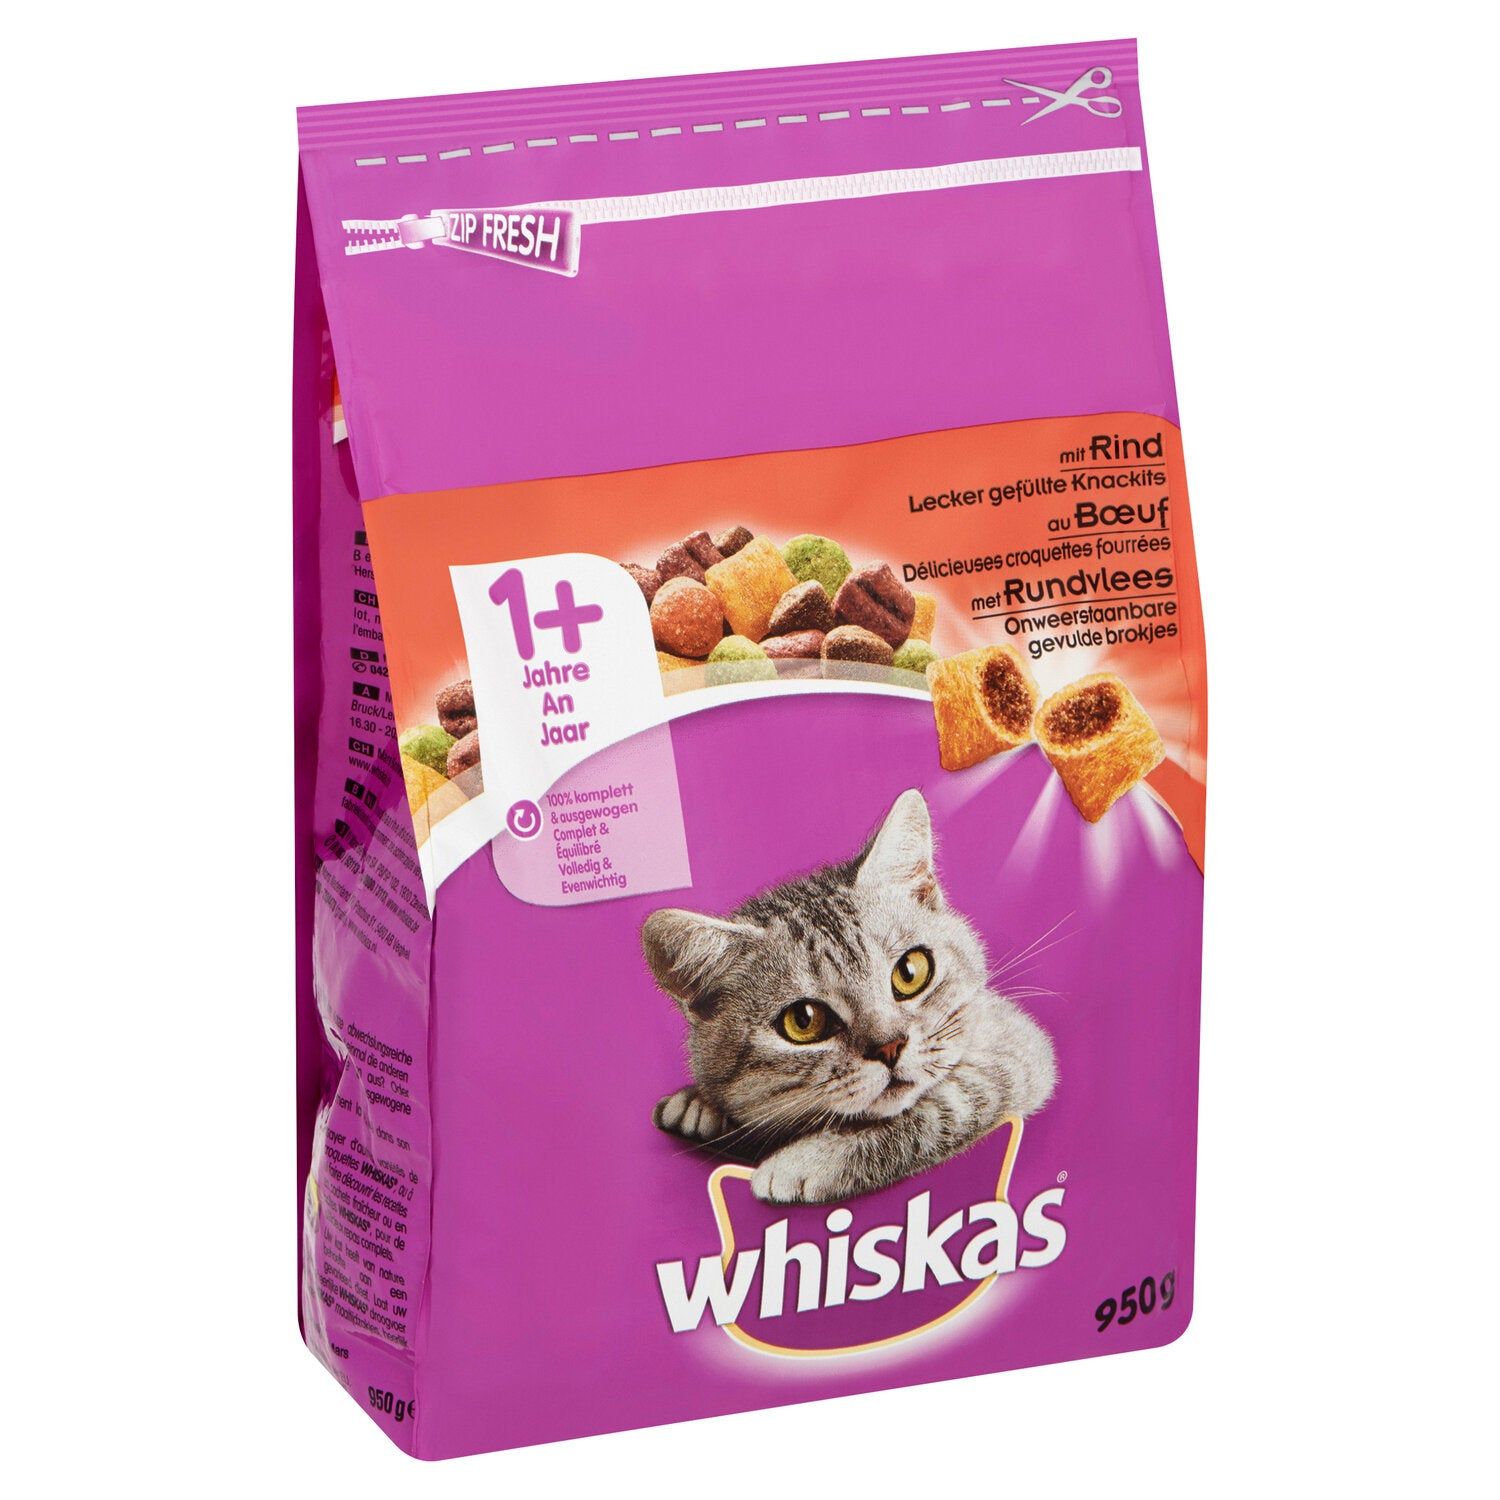 Boekwinkel Teleurgesteld hersenen Whiskas kattenvoer adult rund (950 gram) - Tuincentrum Borghuis